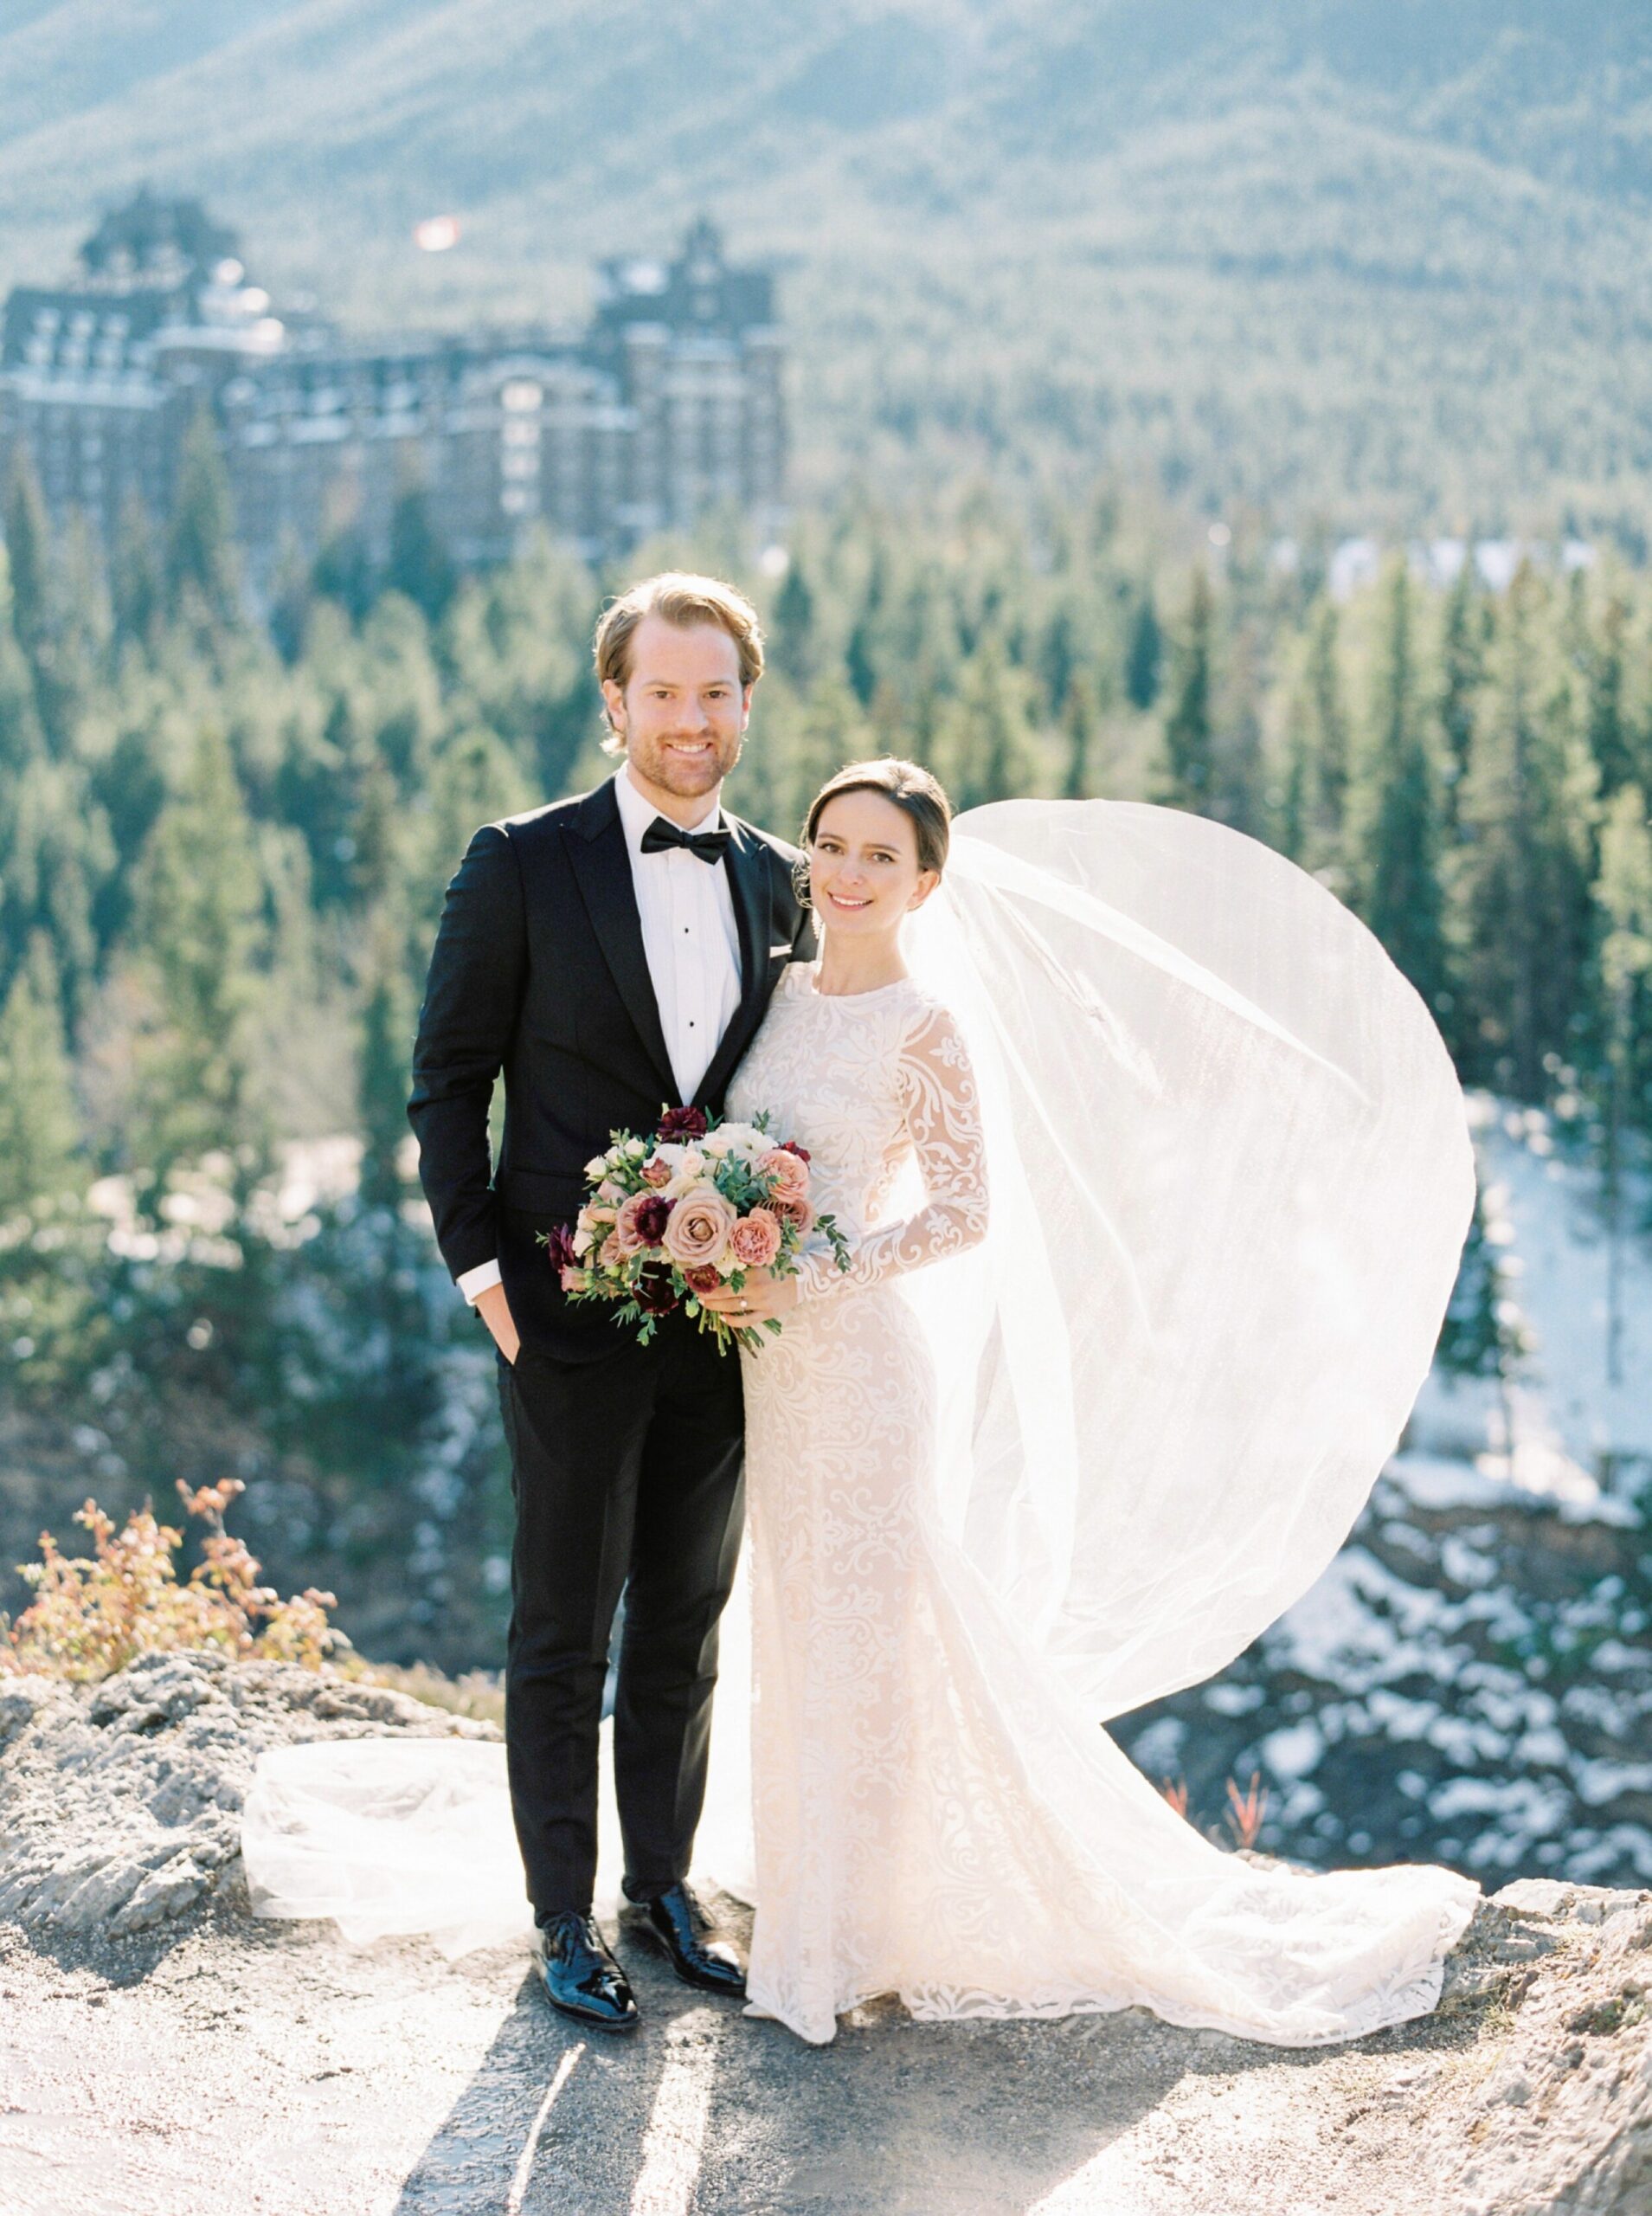  Bride and groom pose ideas | winter wedding |long sleeve lace wedding dress inspiration | banff springs wedding photographer 